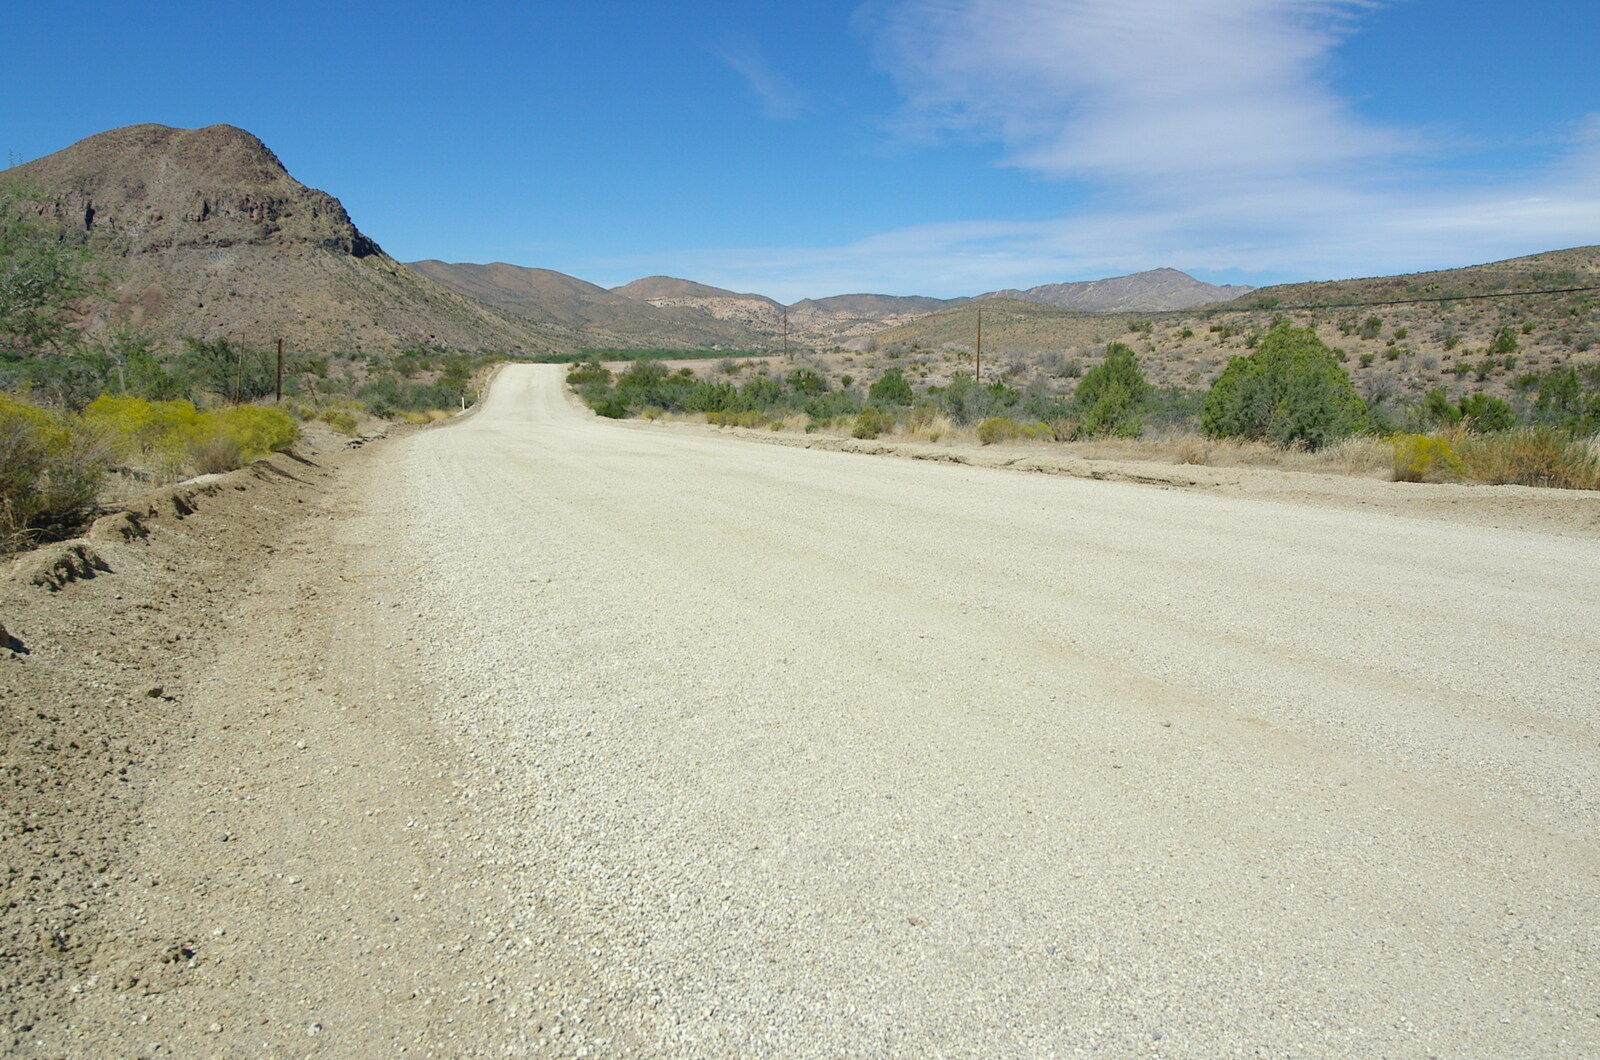 A gravel road from California Desert: El Centro, Imperial Valley, California, US - 24th September 2005